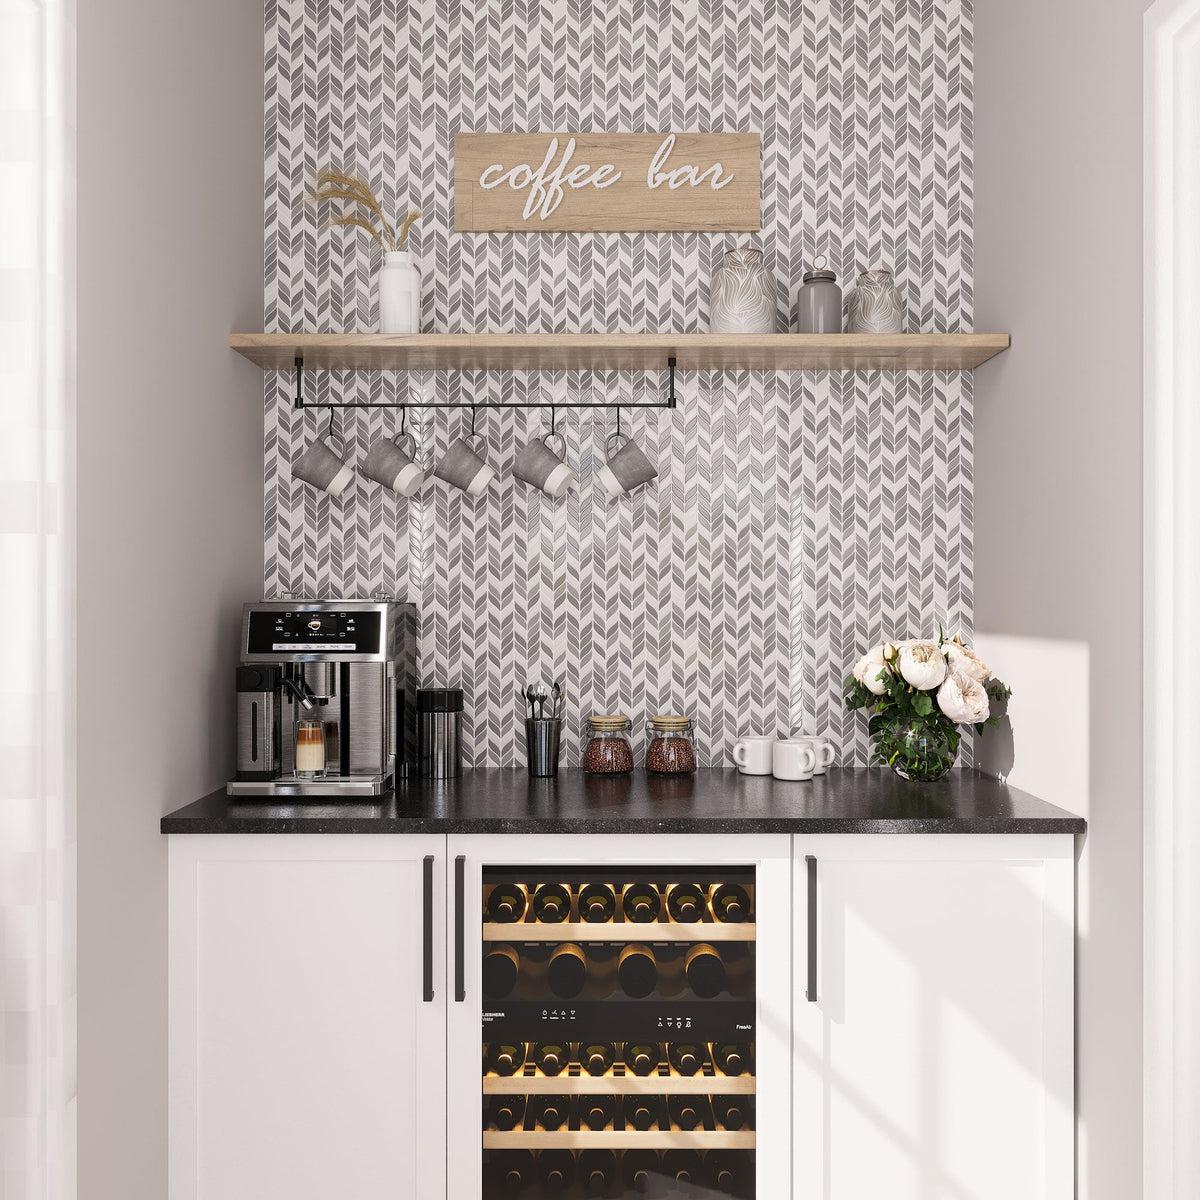 Coffee bar with white and gray tile backsplash